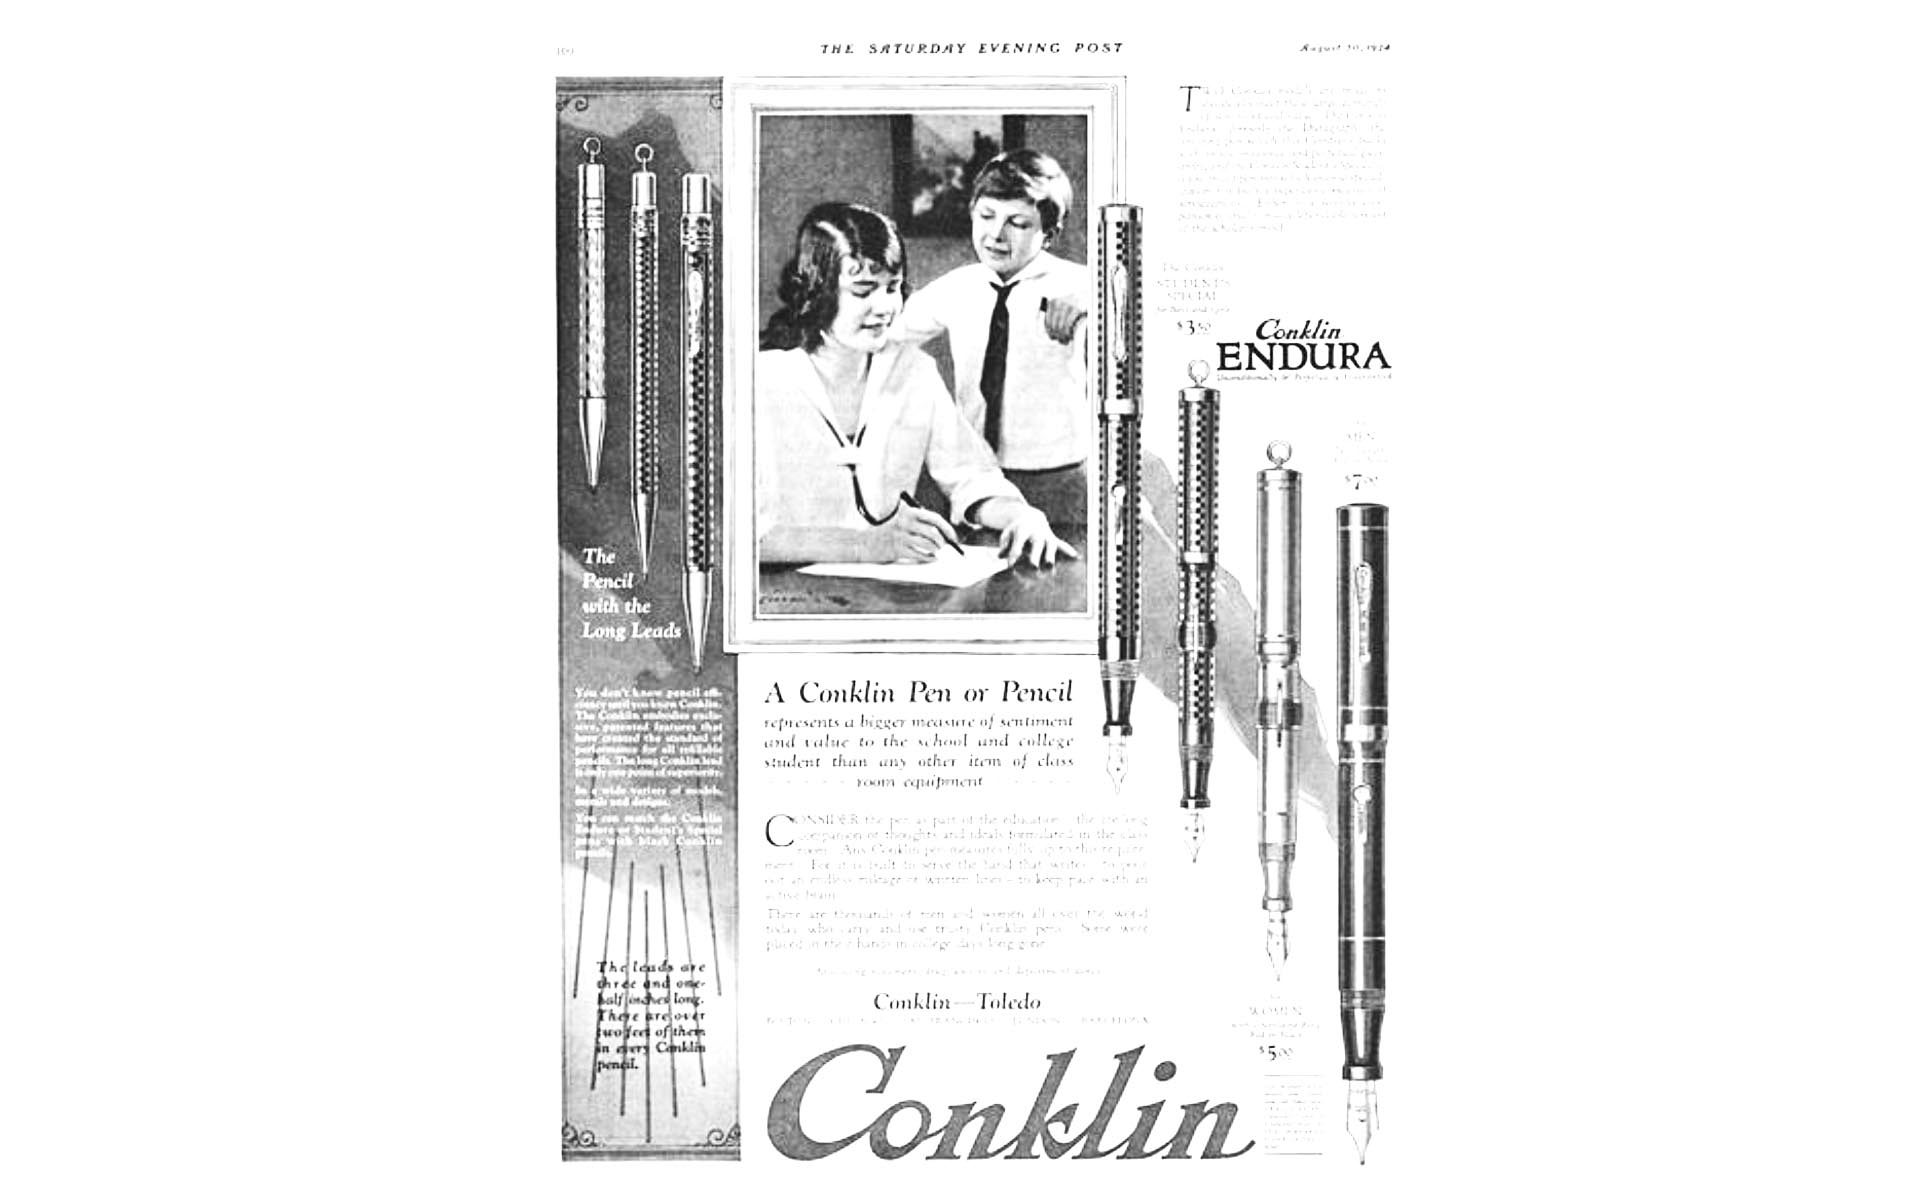 Conklin usa شرکت نوشت افزار و خودنویس